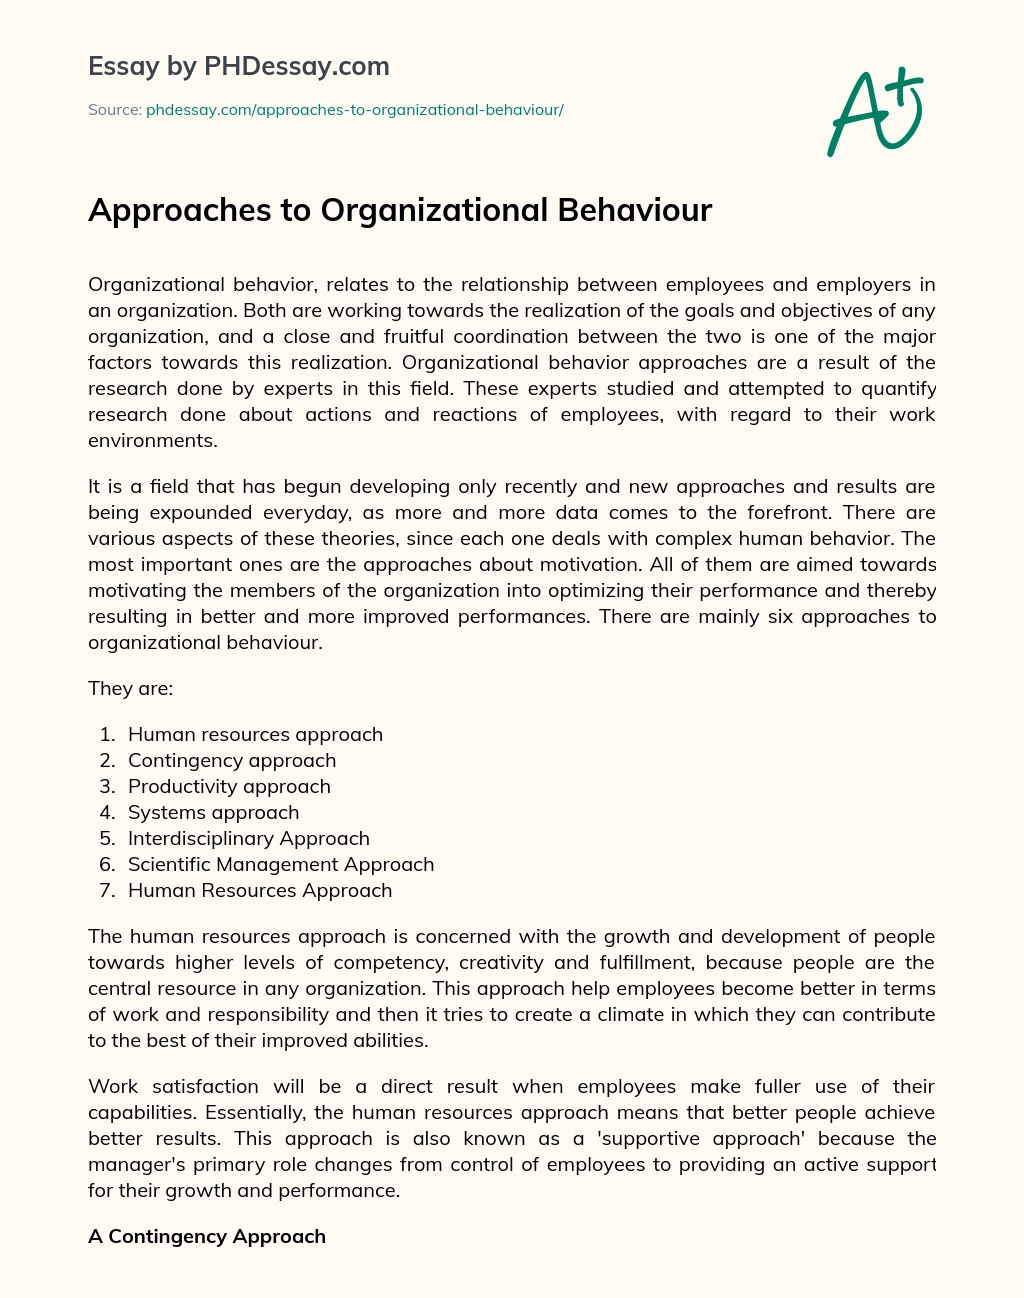 Approaches to Organizational Behaviour essay